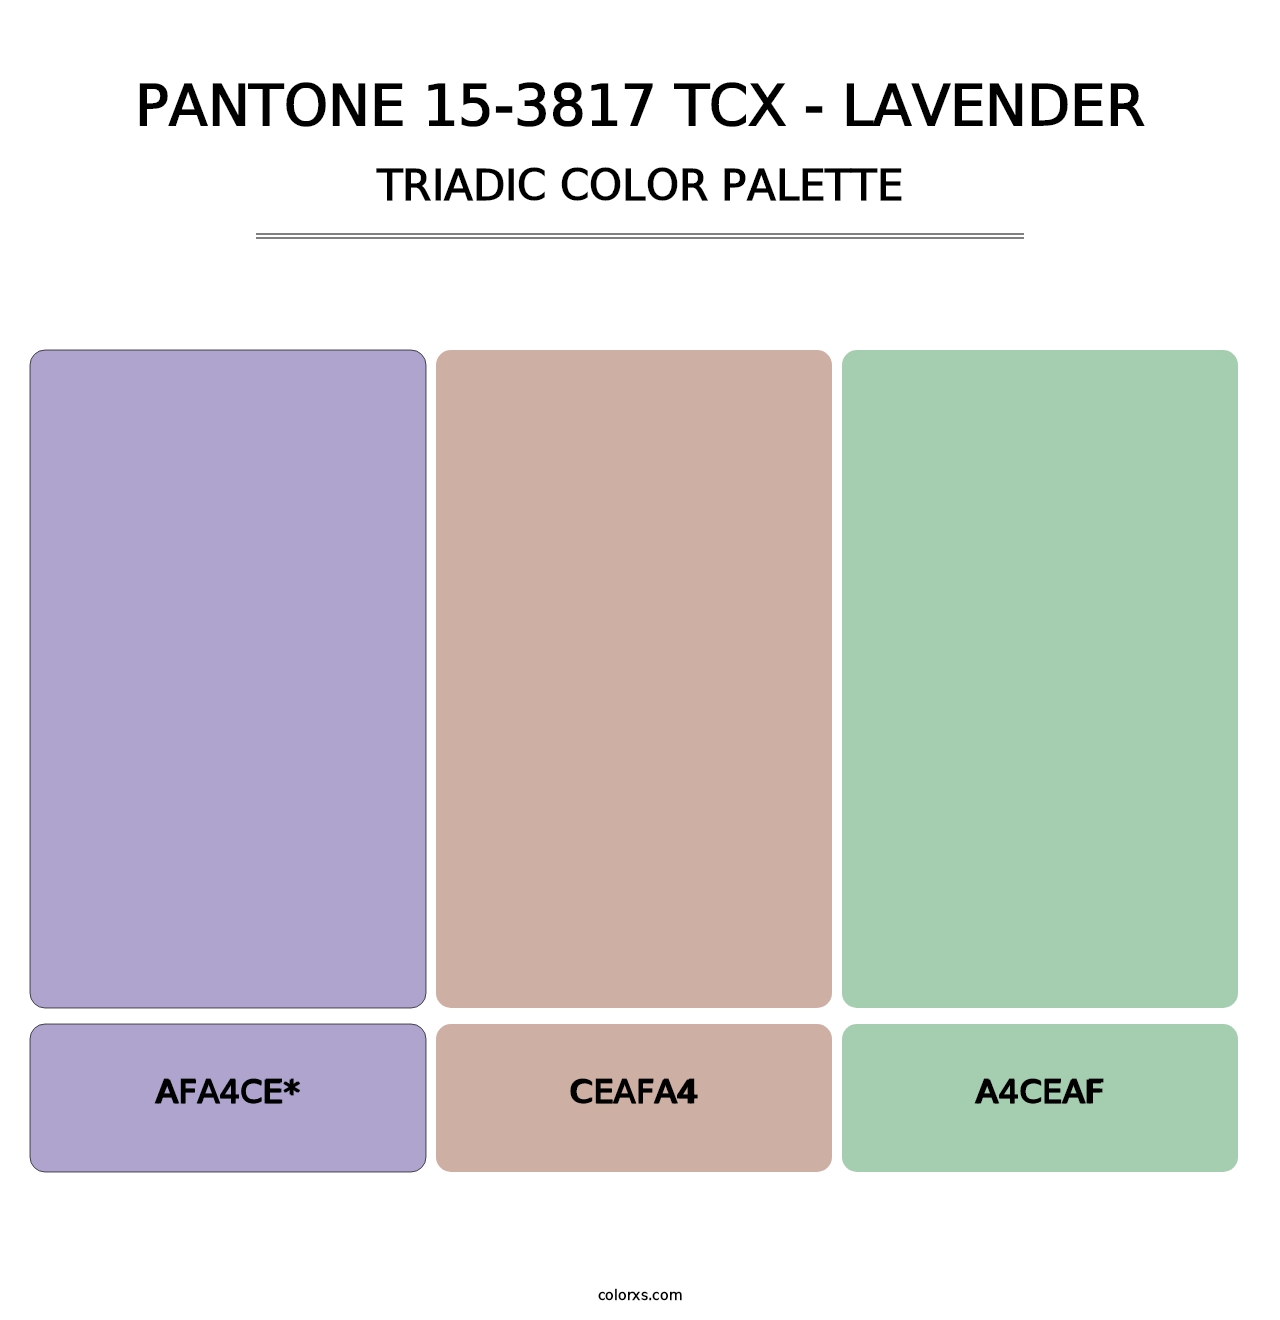 PANTONE 15-3817 TCX - Lavender - Triadic Color Palette